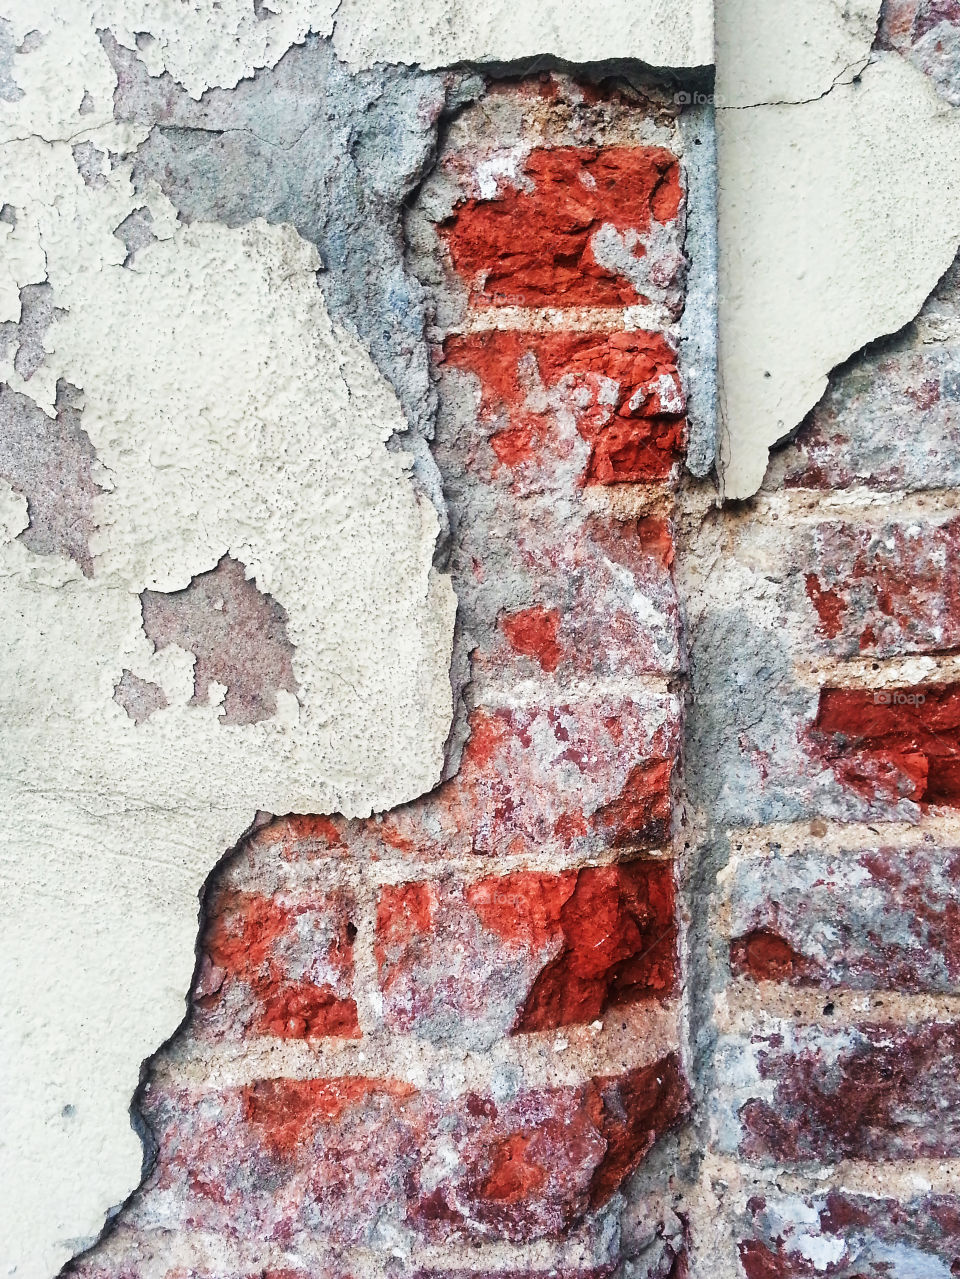 Cracked brick wall background